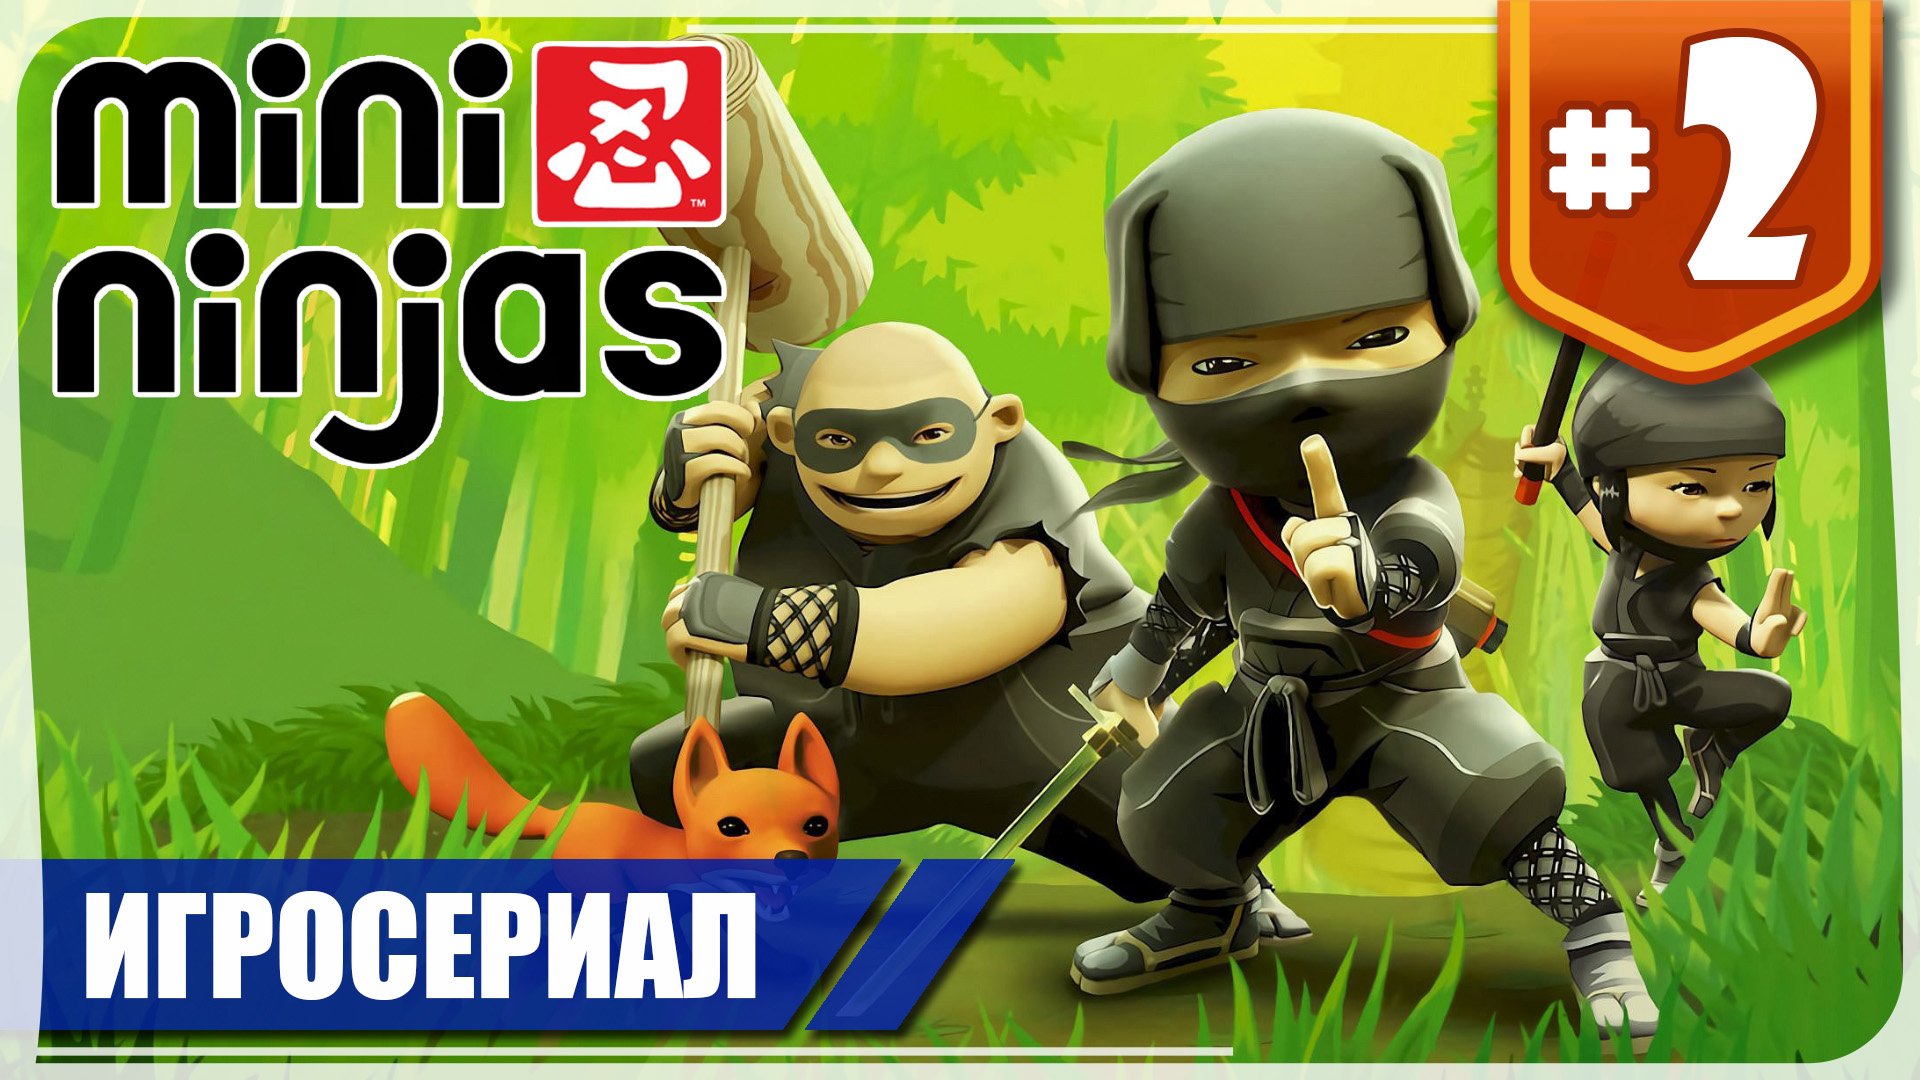 Mini Ninjas #2 ❖ Игросериал